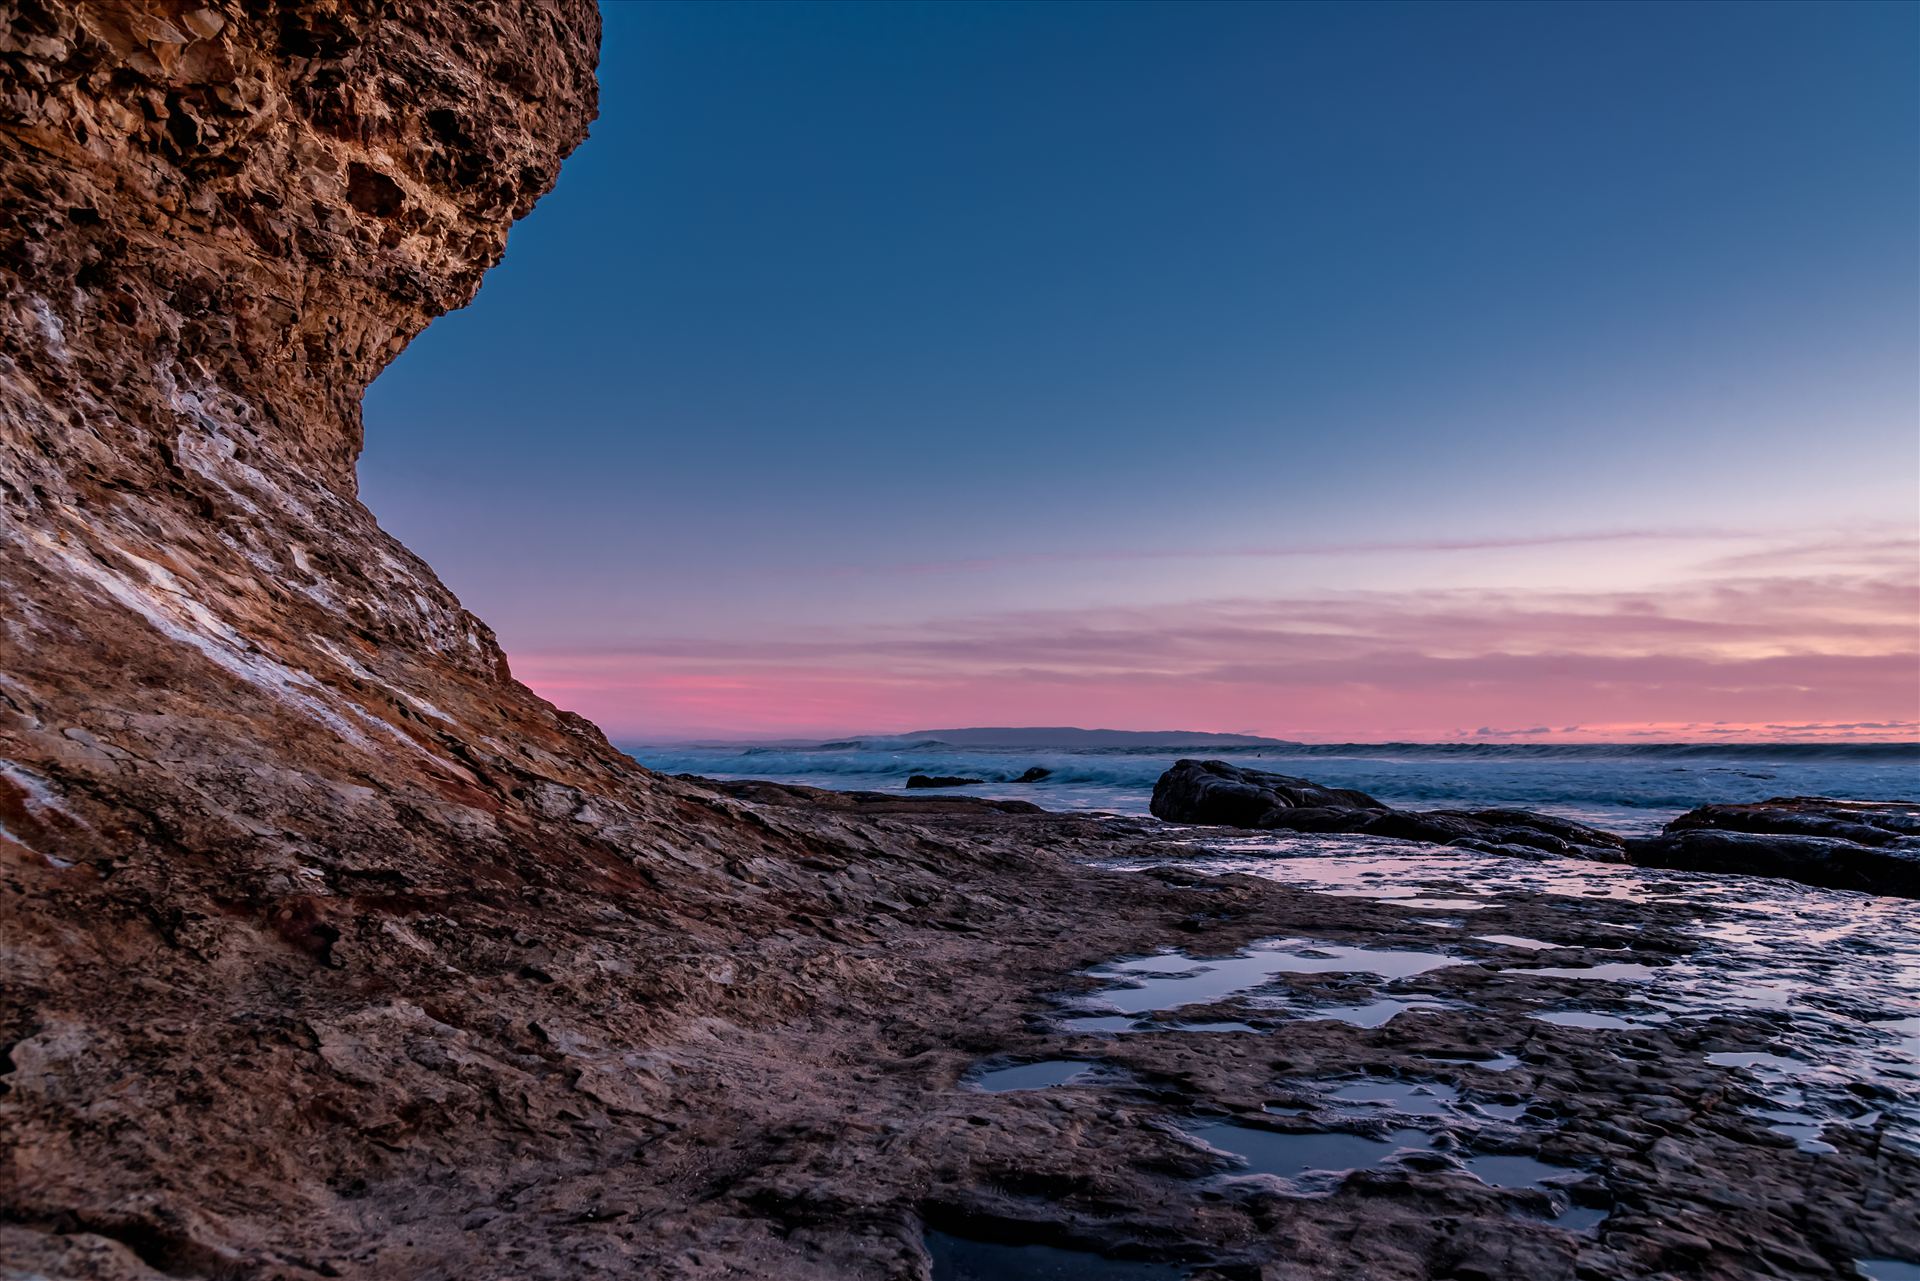 Shell Beach Cliff Pink Sunset.jpg  by Sarah Williams